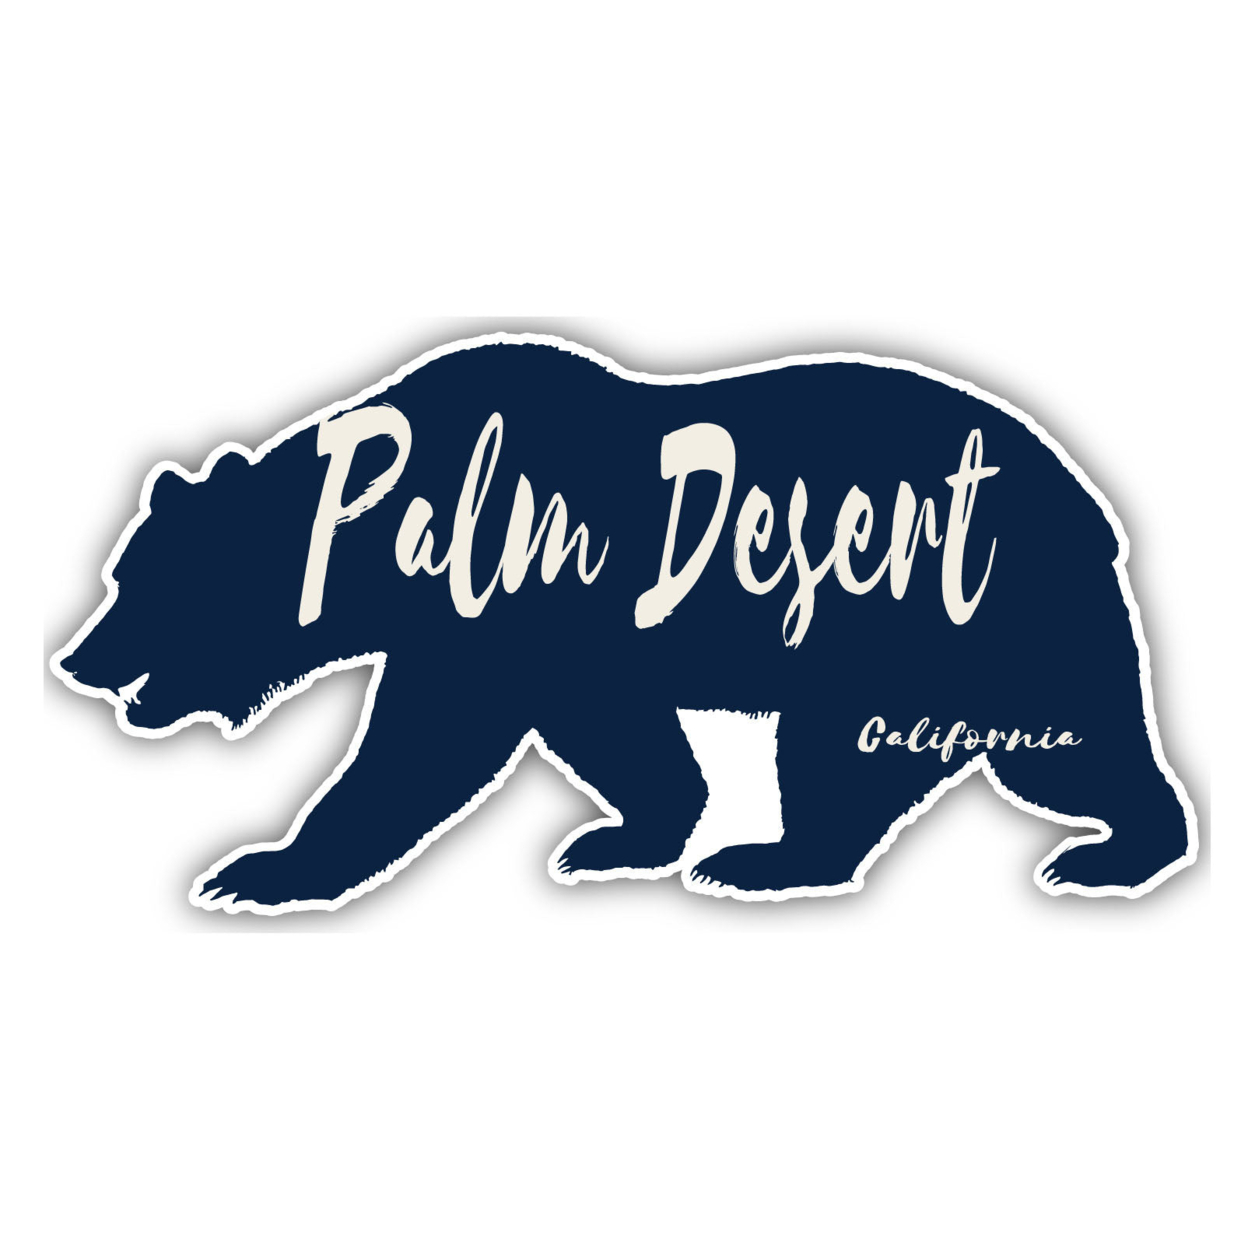 Palm Desert California Souvenir Decorative Stickers (Choose Theme And Size) - Single Unit, 2-Inch, Adventures Awaits